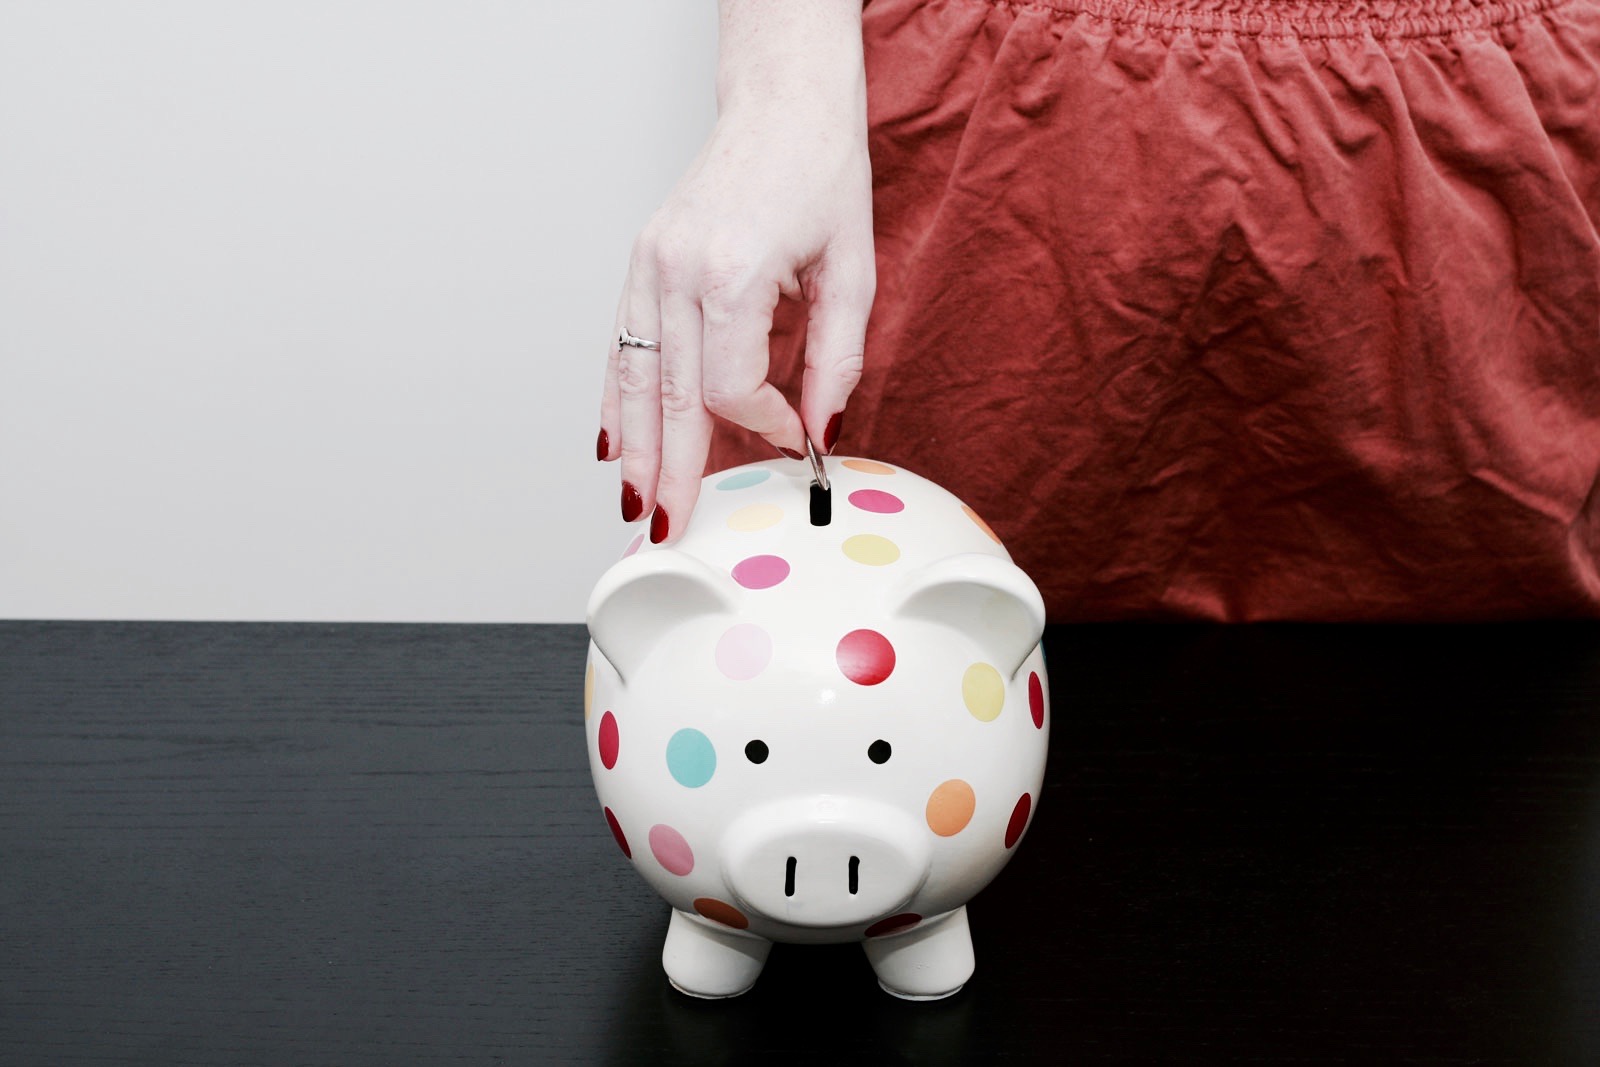 Alyssa deposits a coin in a polka dot piggy bank